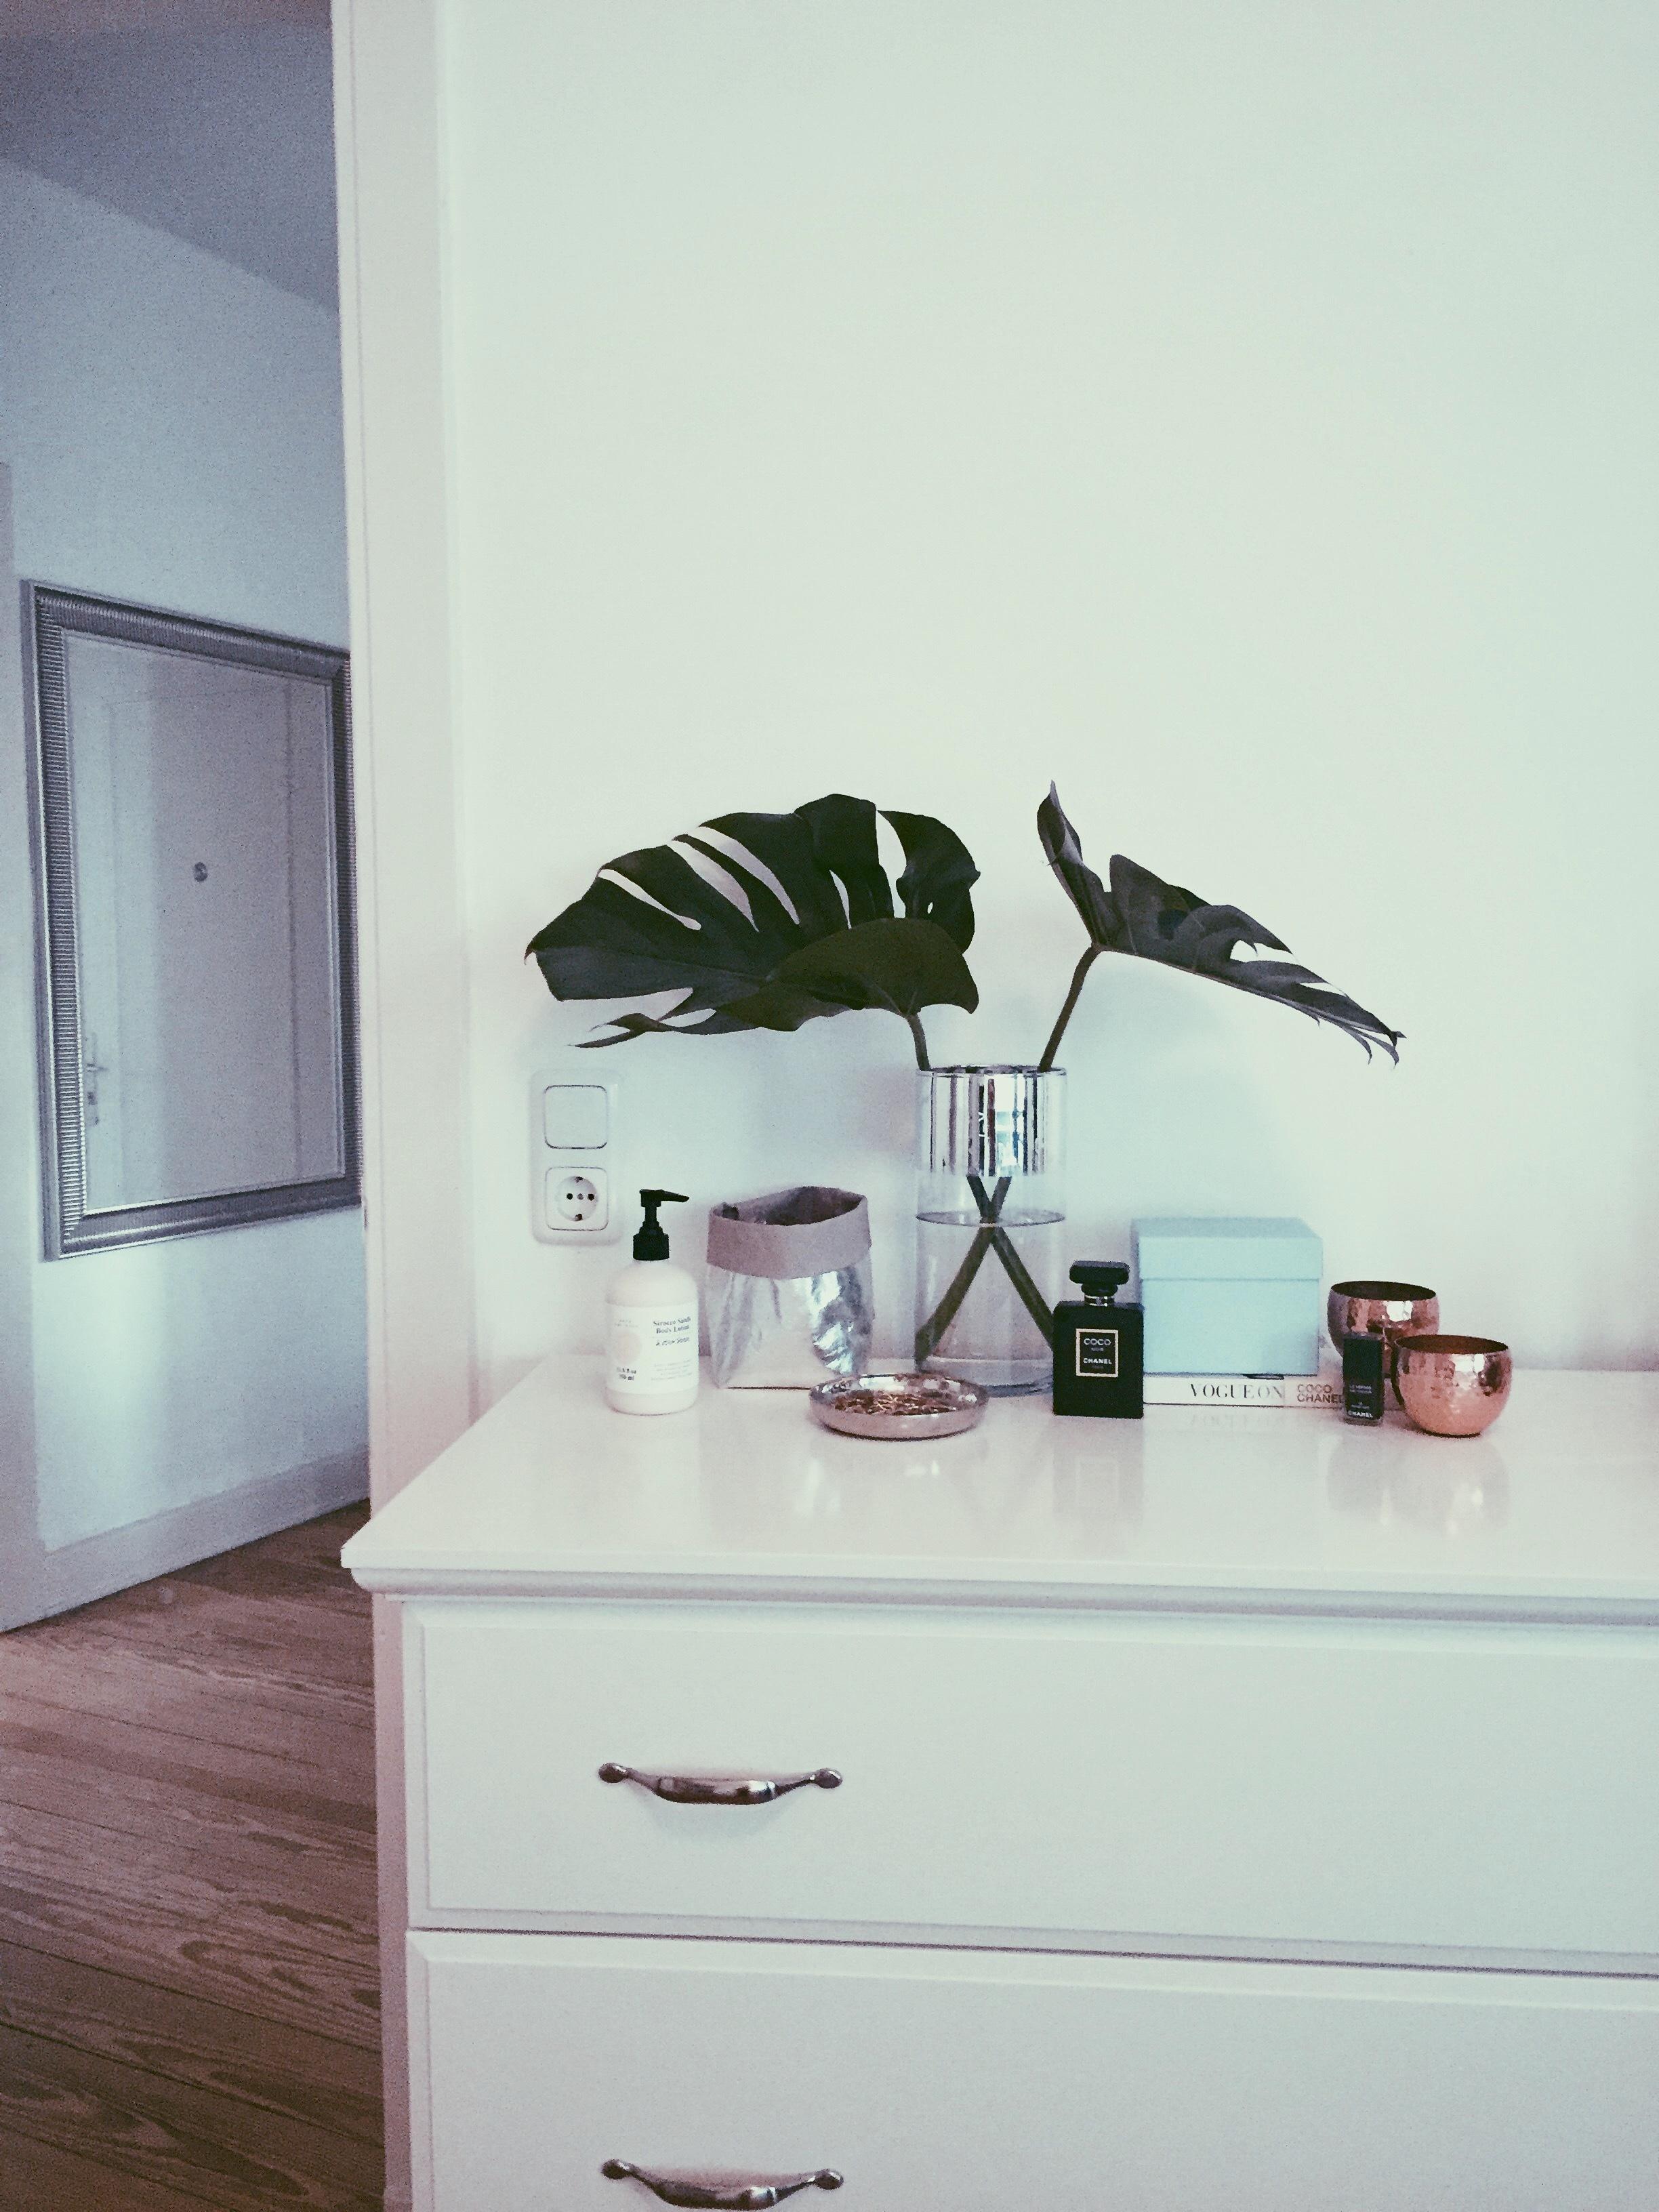 Kommode im Schlafzimmer mit Monstera Blättern #kommode #ikea ©carina